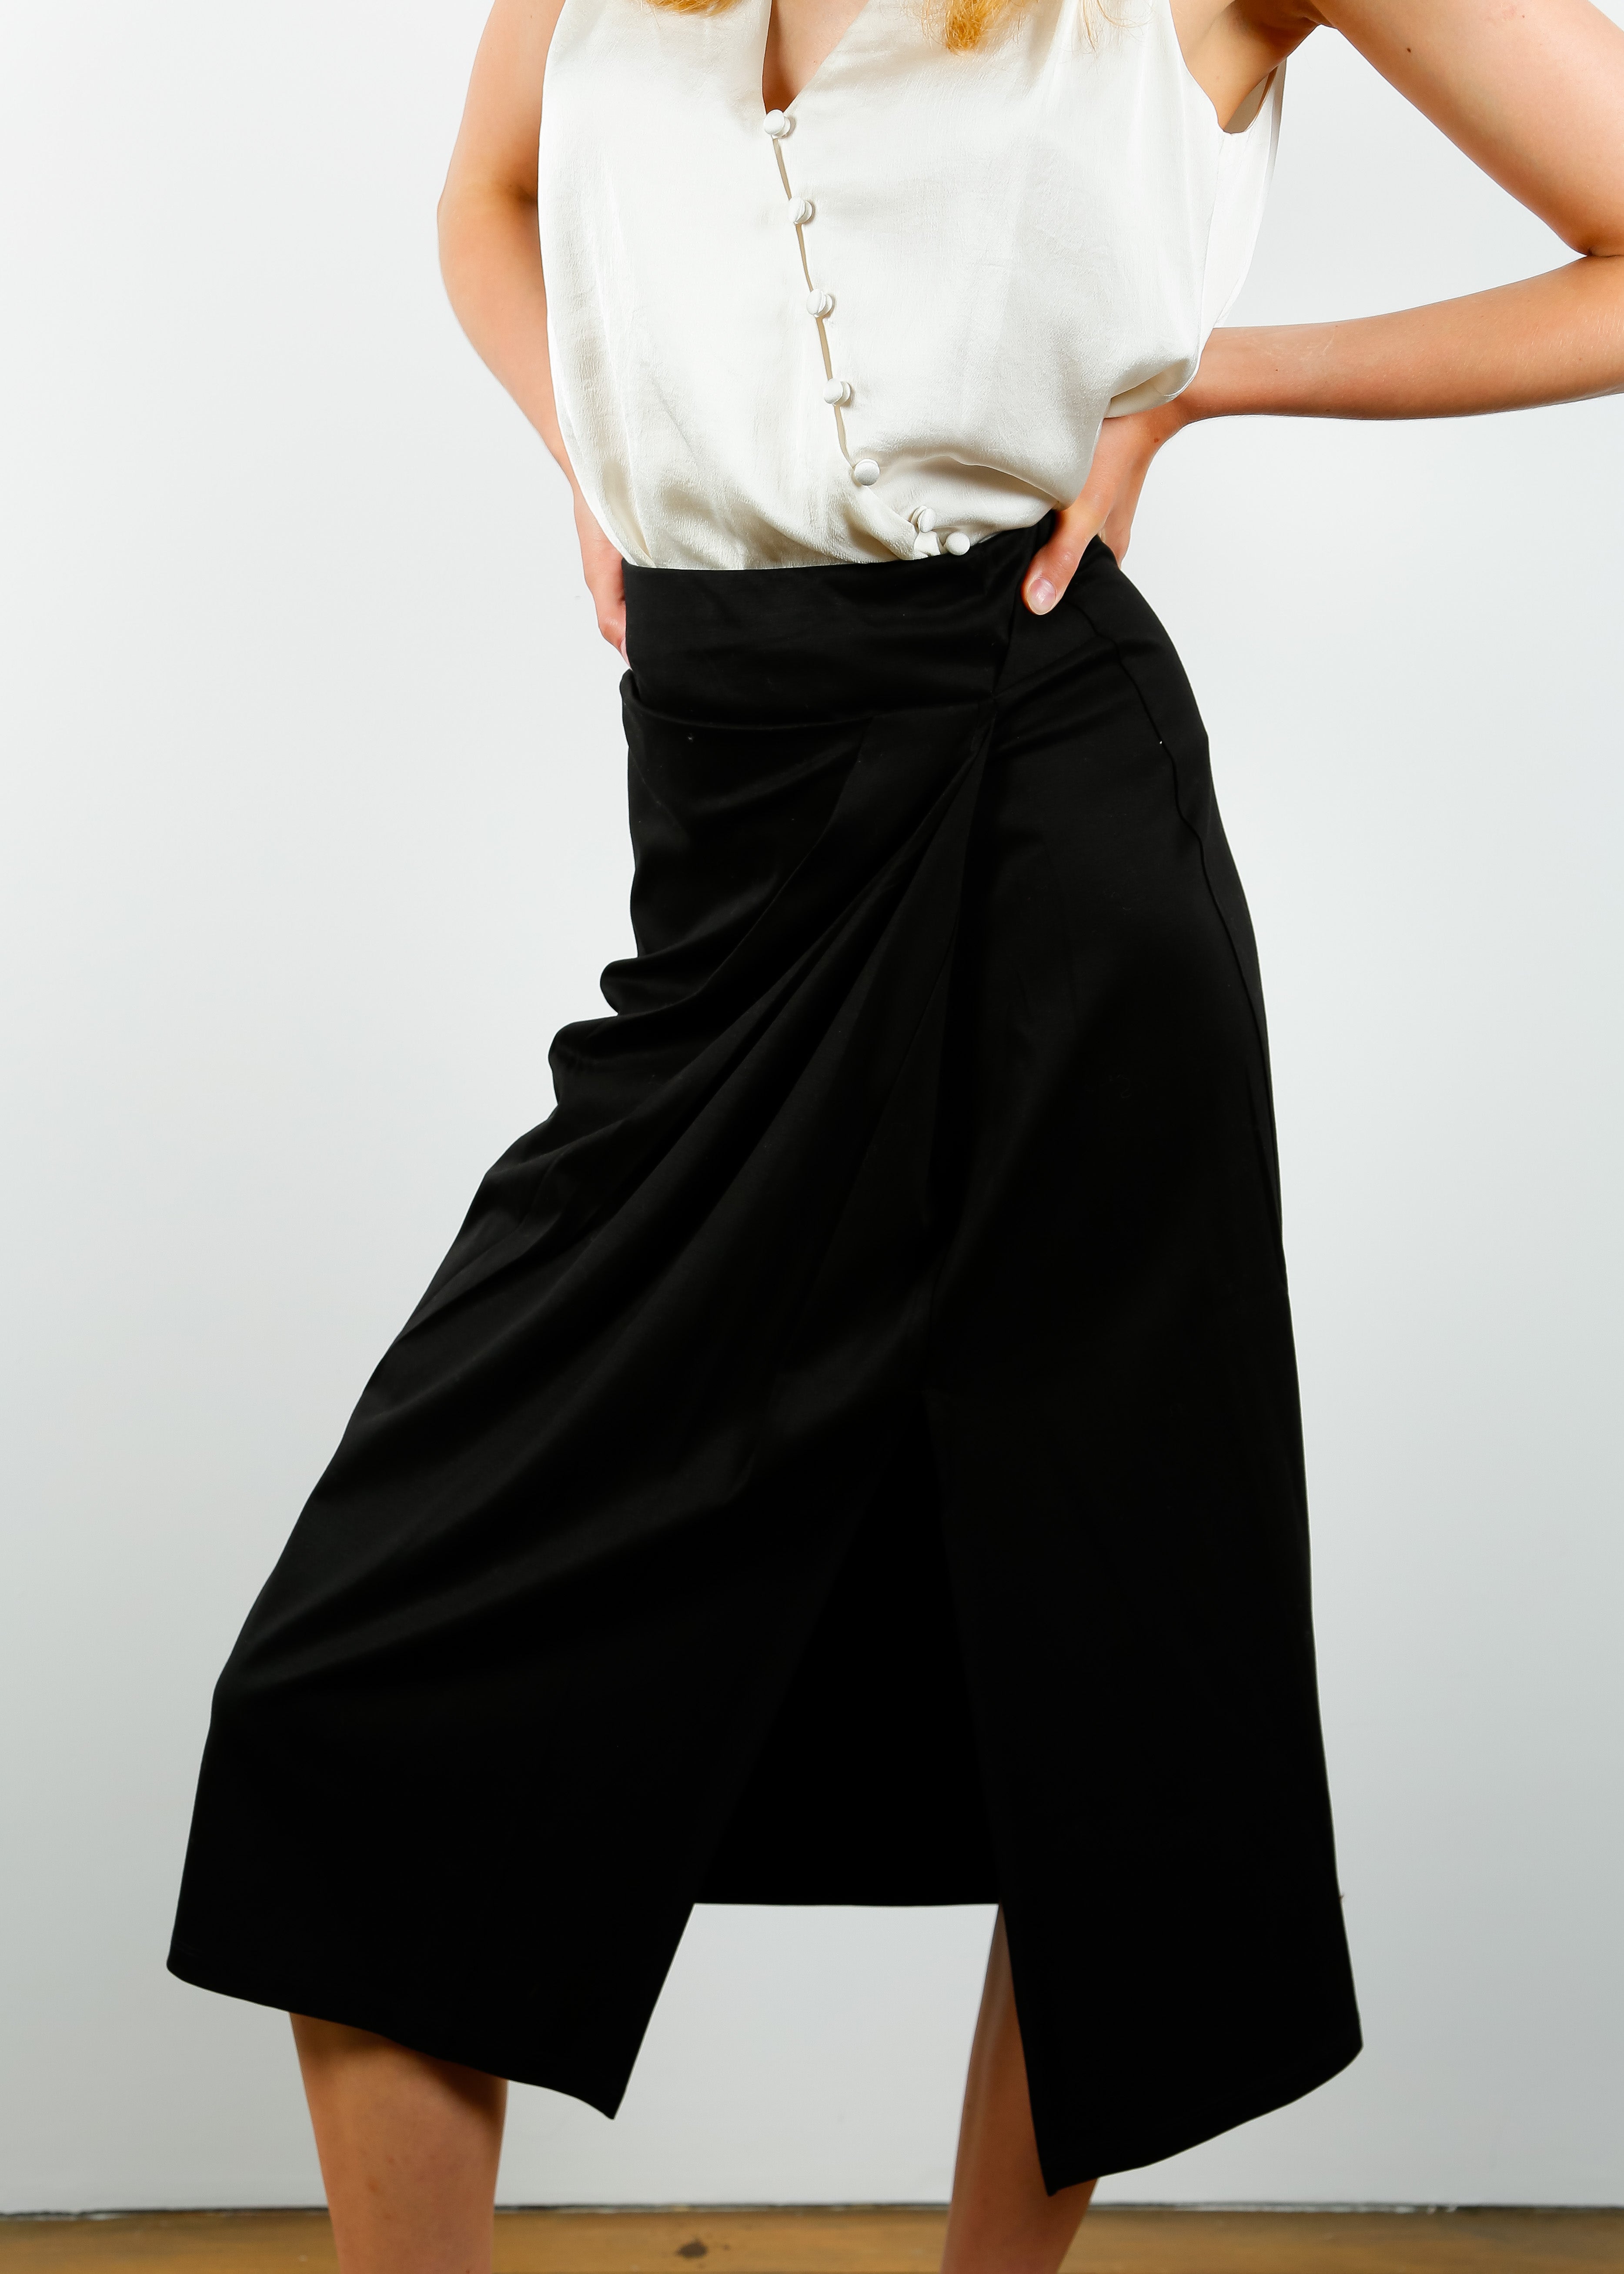 MM Burano Jersey Skirts in Black